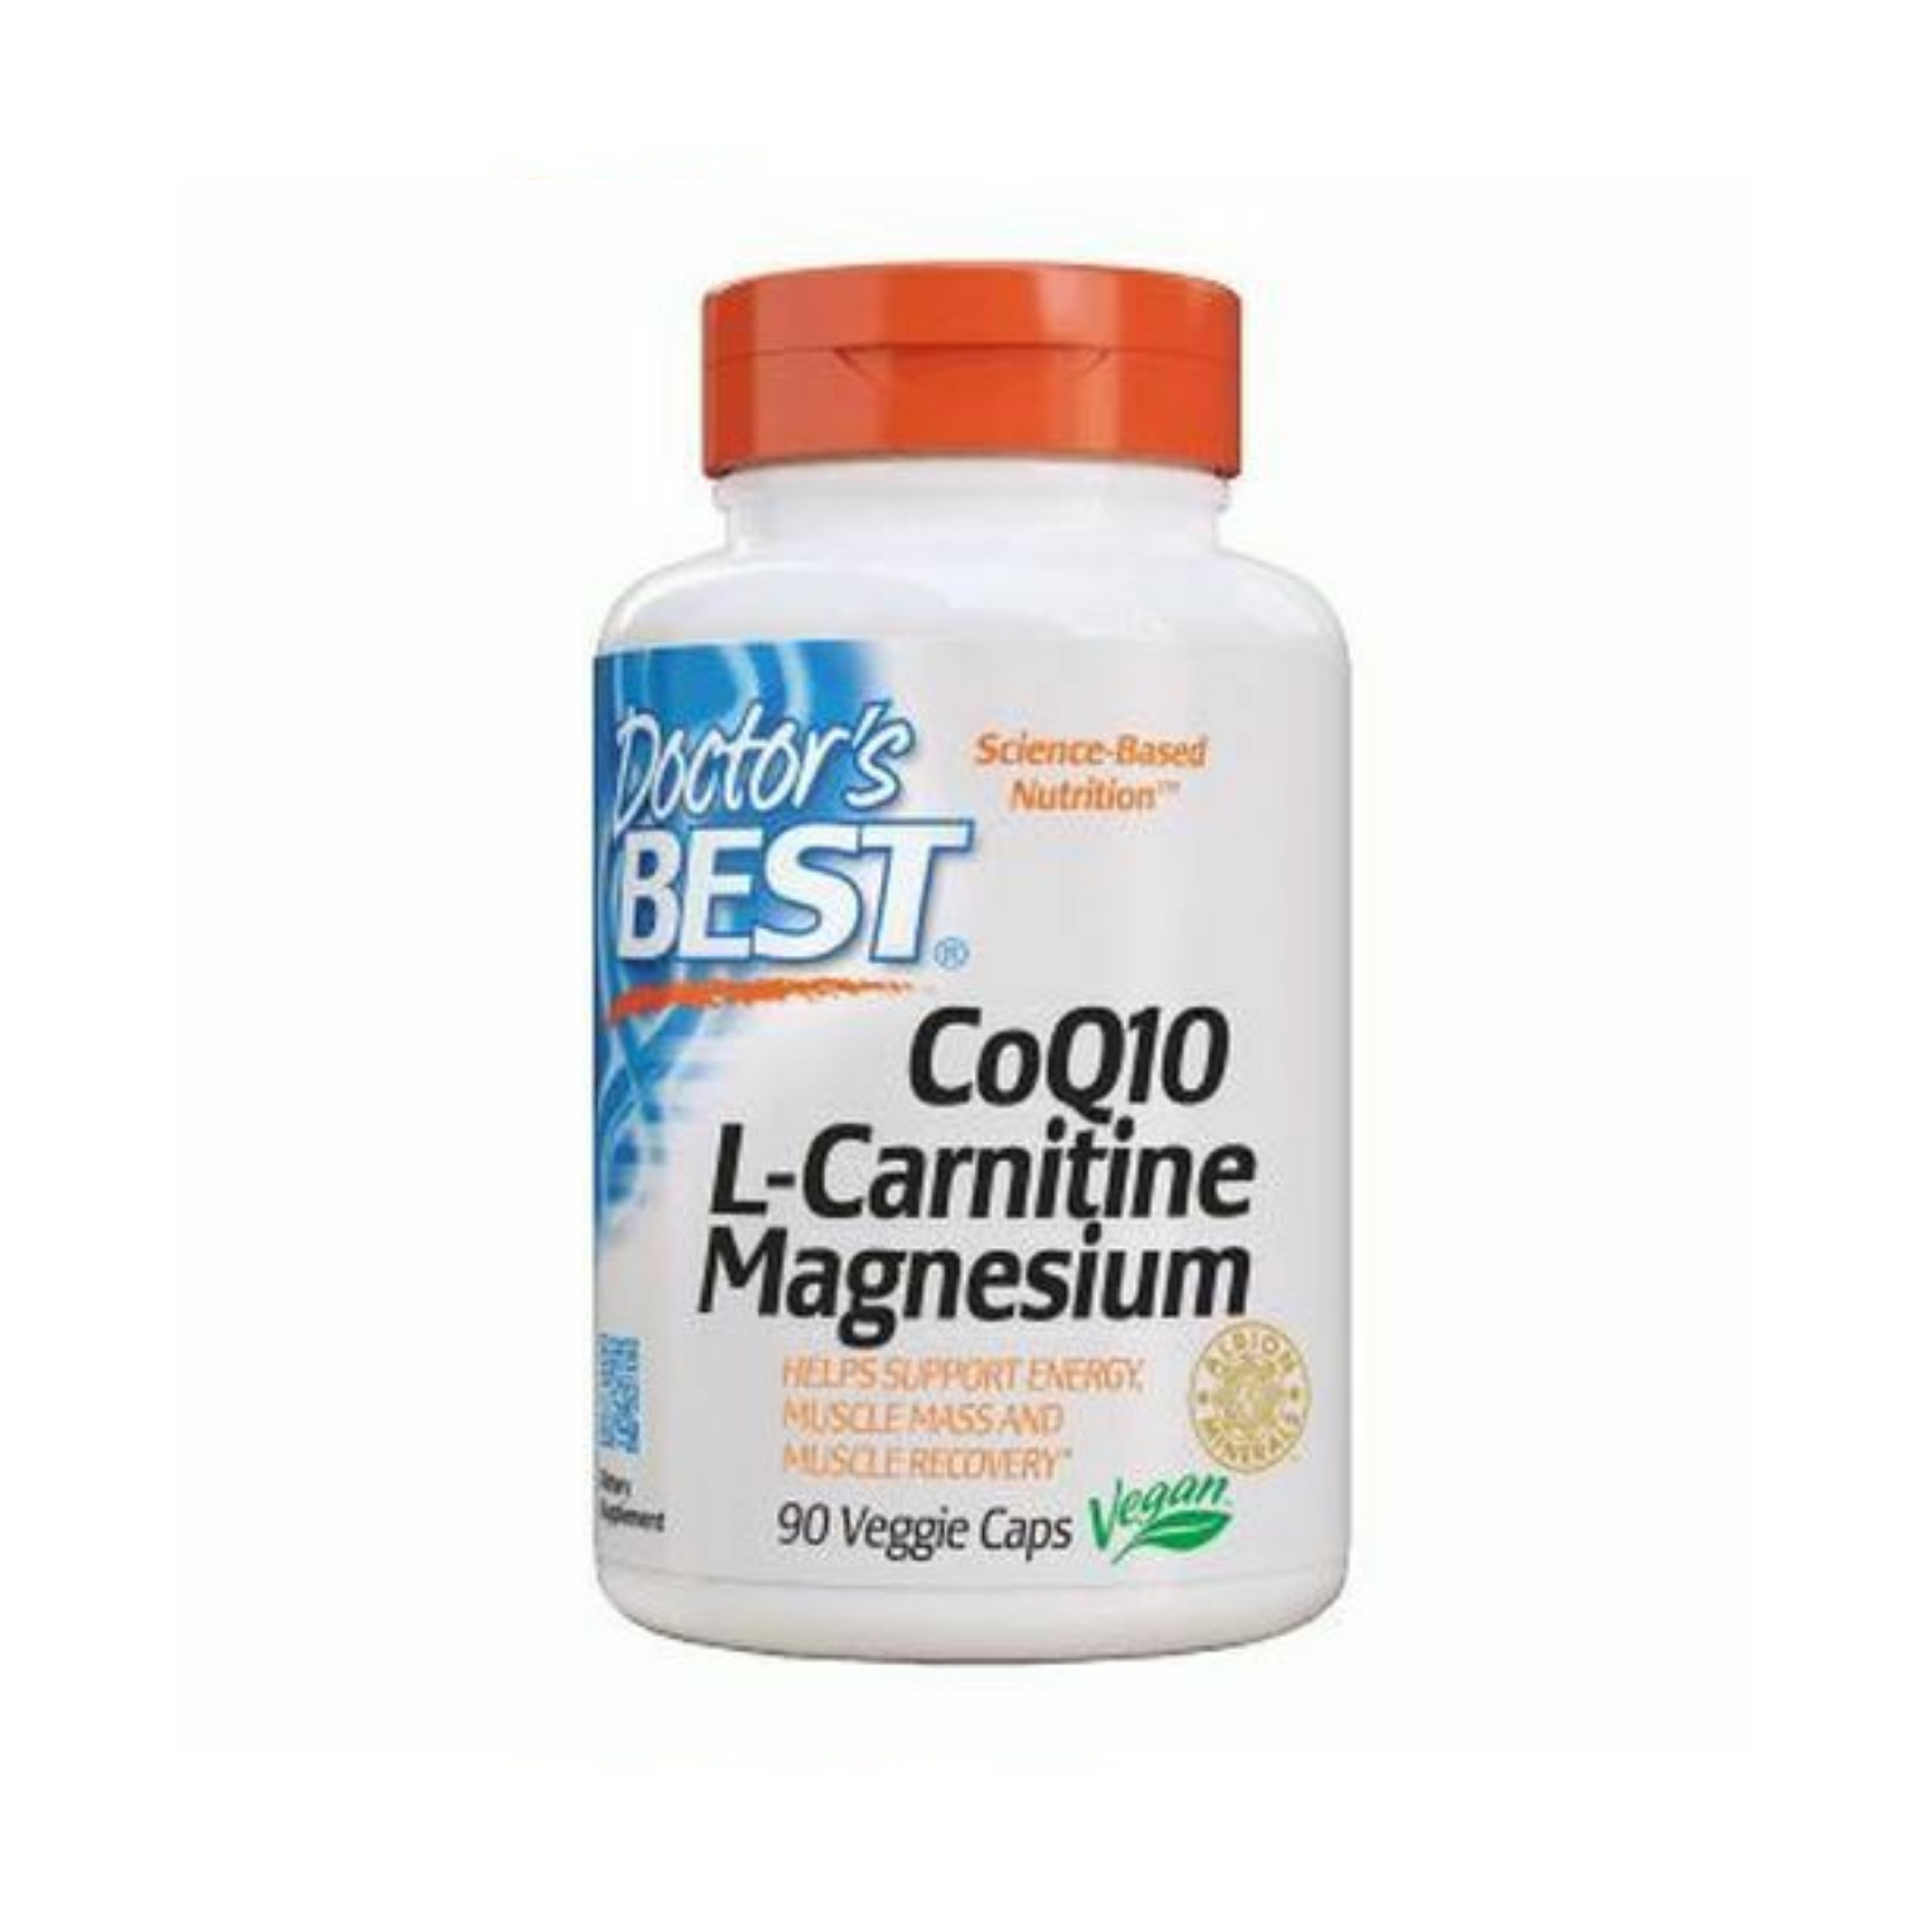 Doctor's Best Coq10 L-Carnitine Magnesium